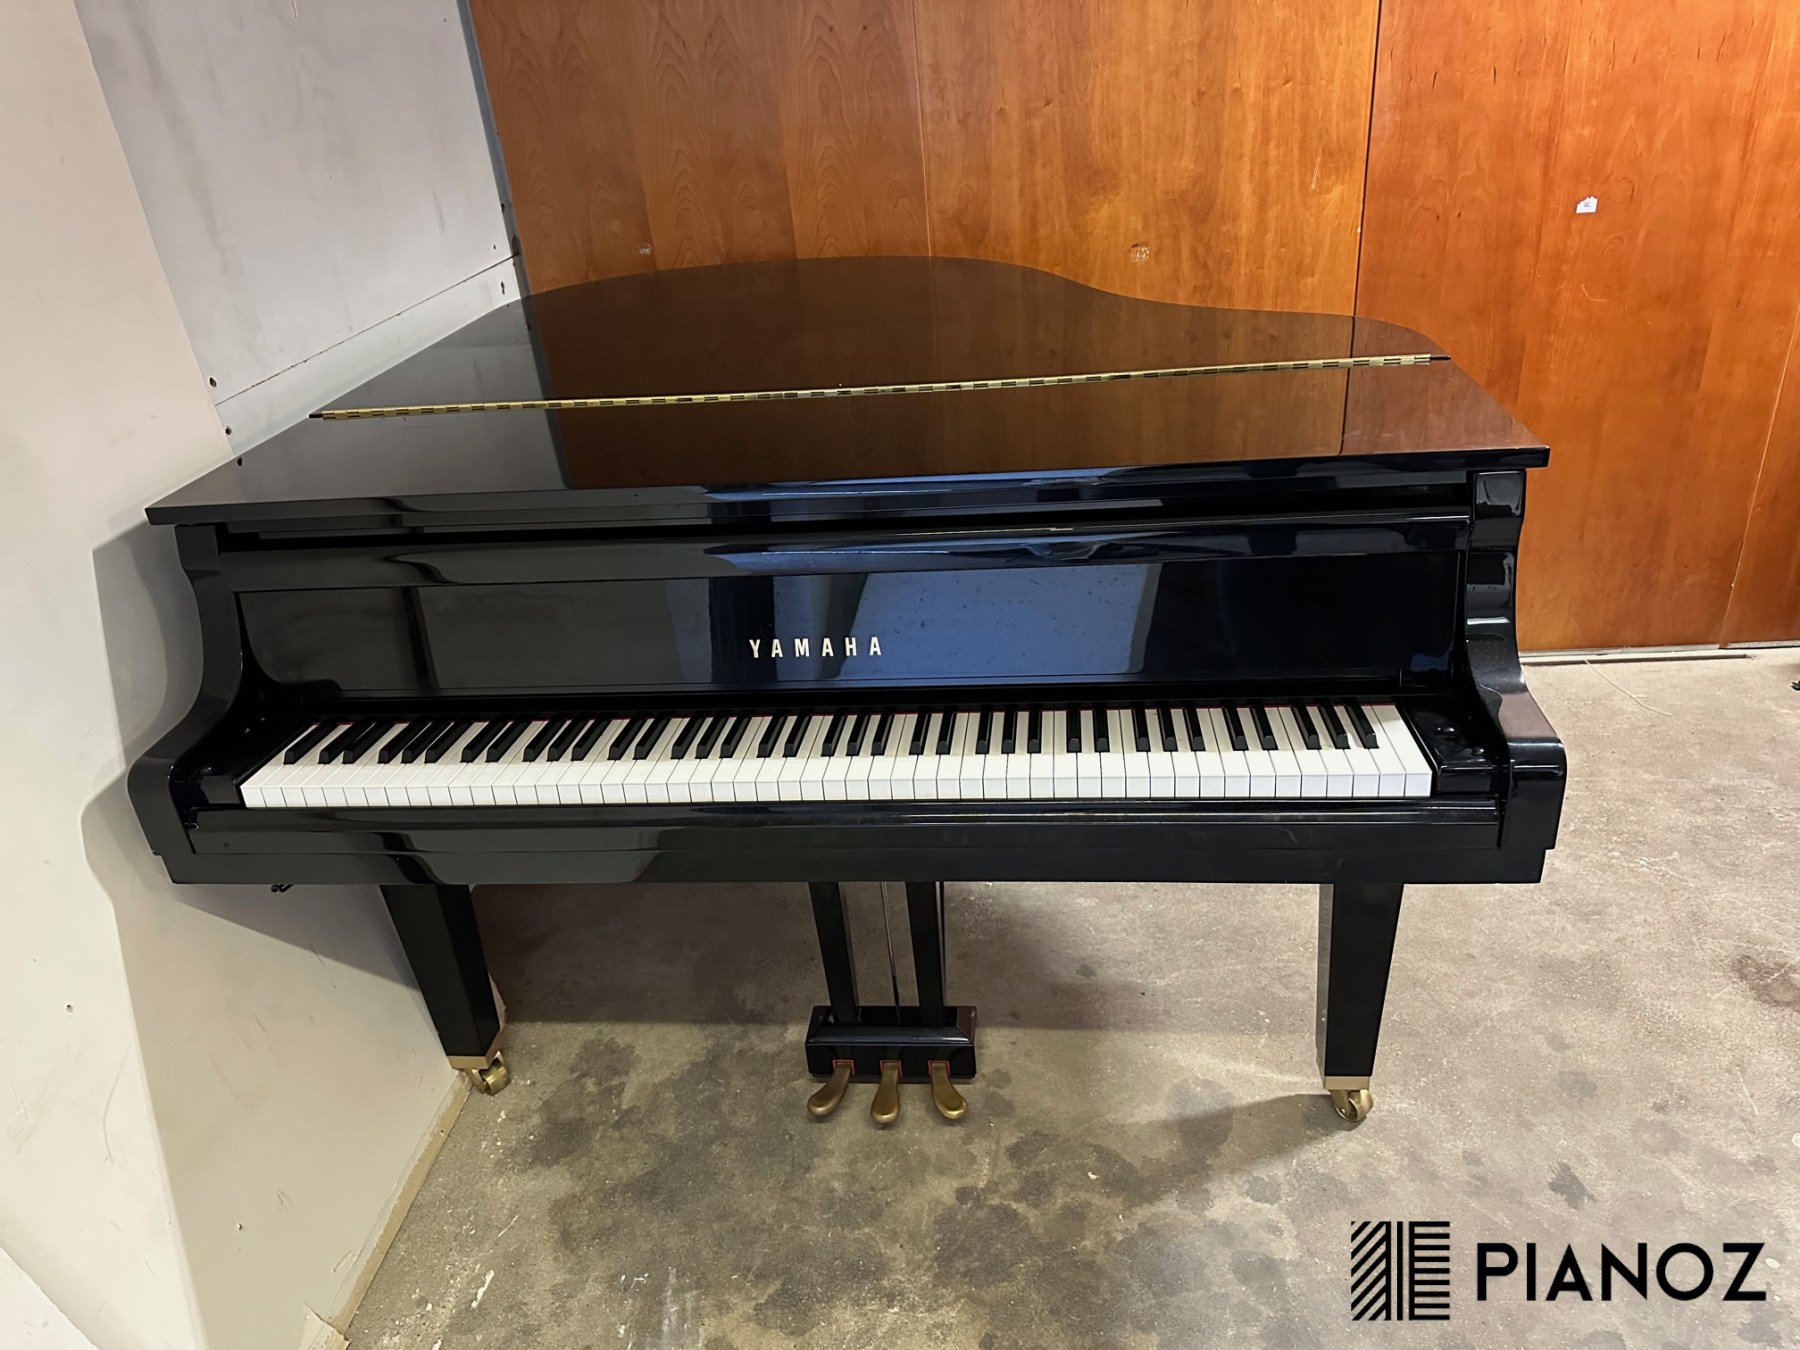  Yamaha GB1 CGP1000 Digital Baby Grand Piano piano for sale in UK